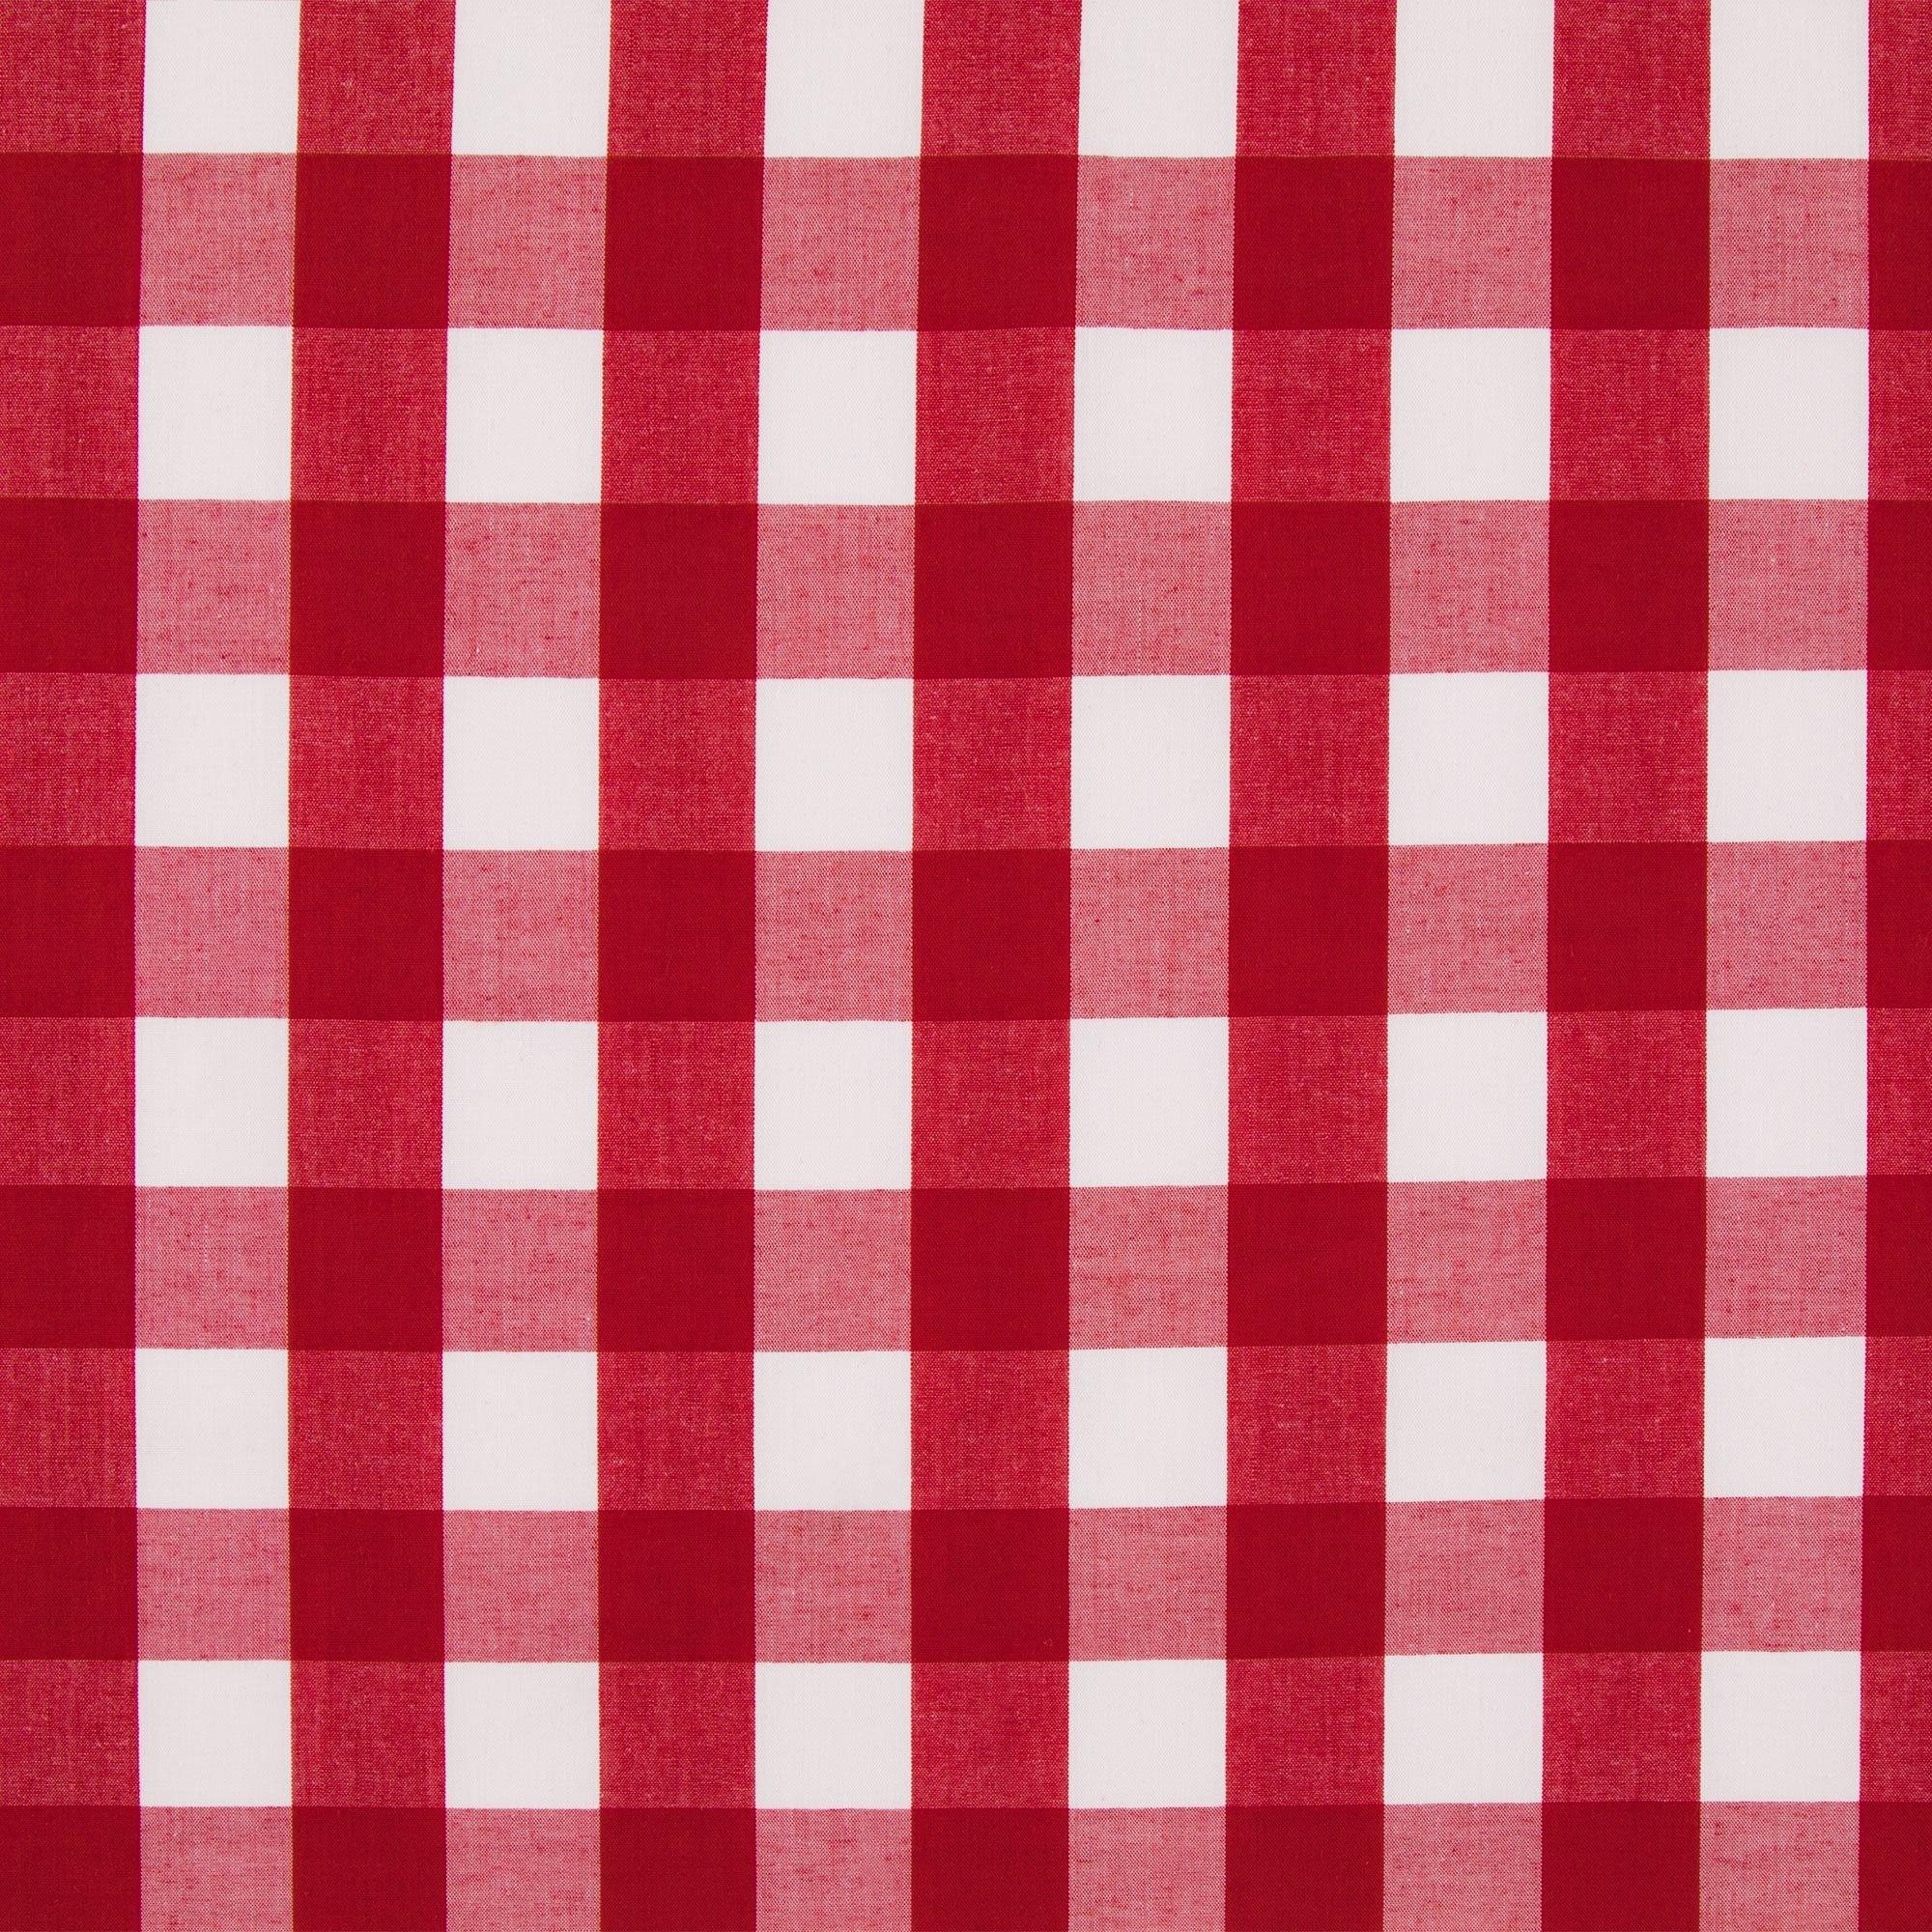 Red and White Plaid Checked Gingham, Robert Kaufman Carolina Gingham Fabric,  Raspberry Creek Fabrics